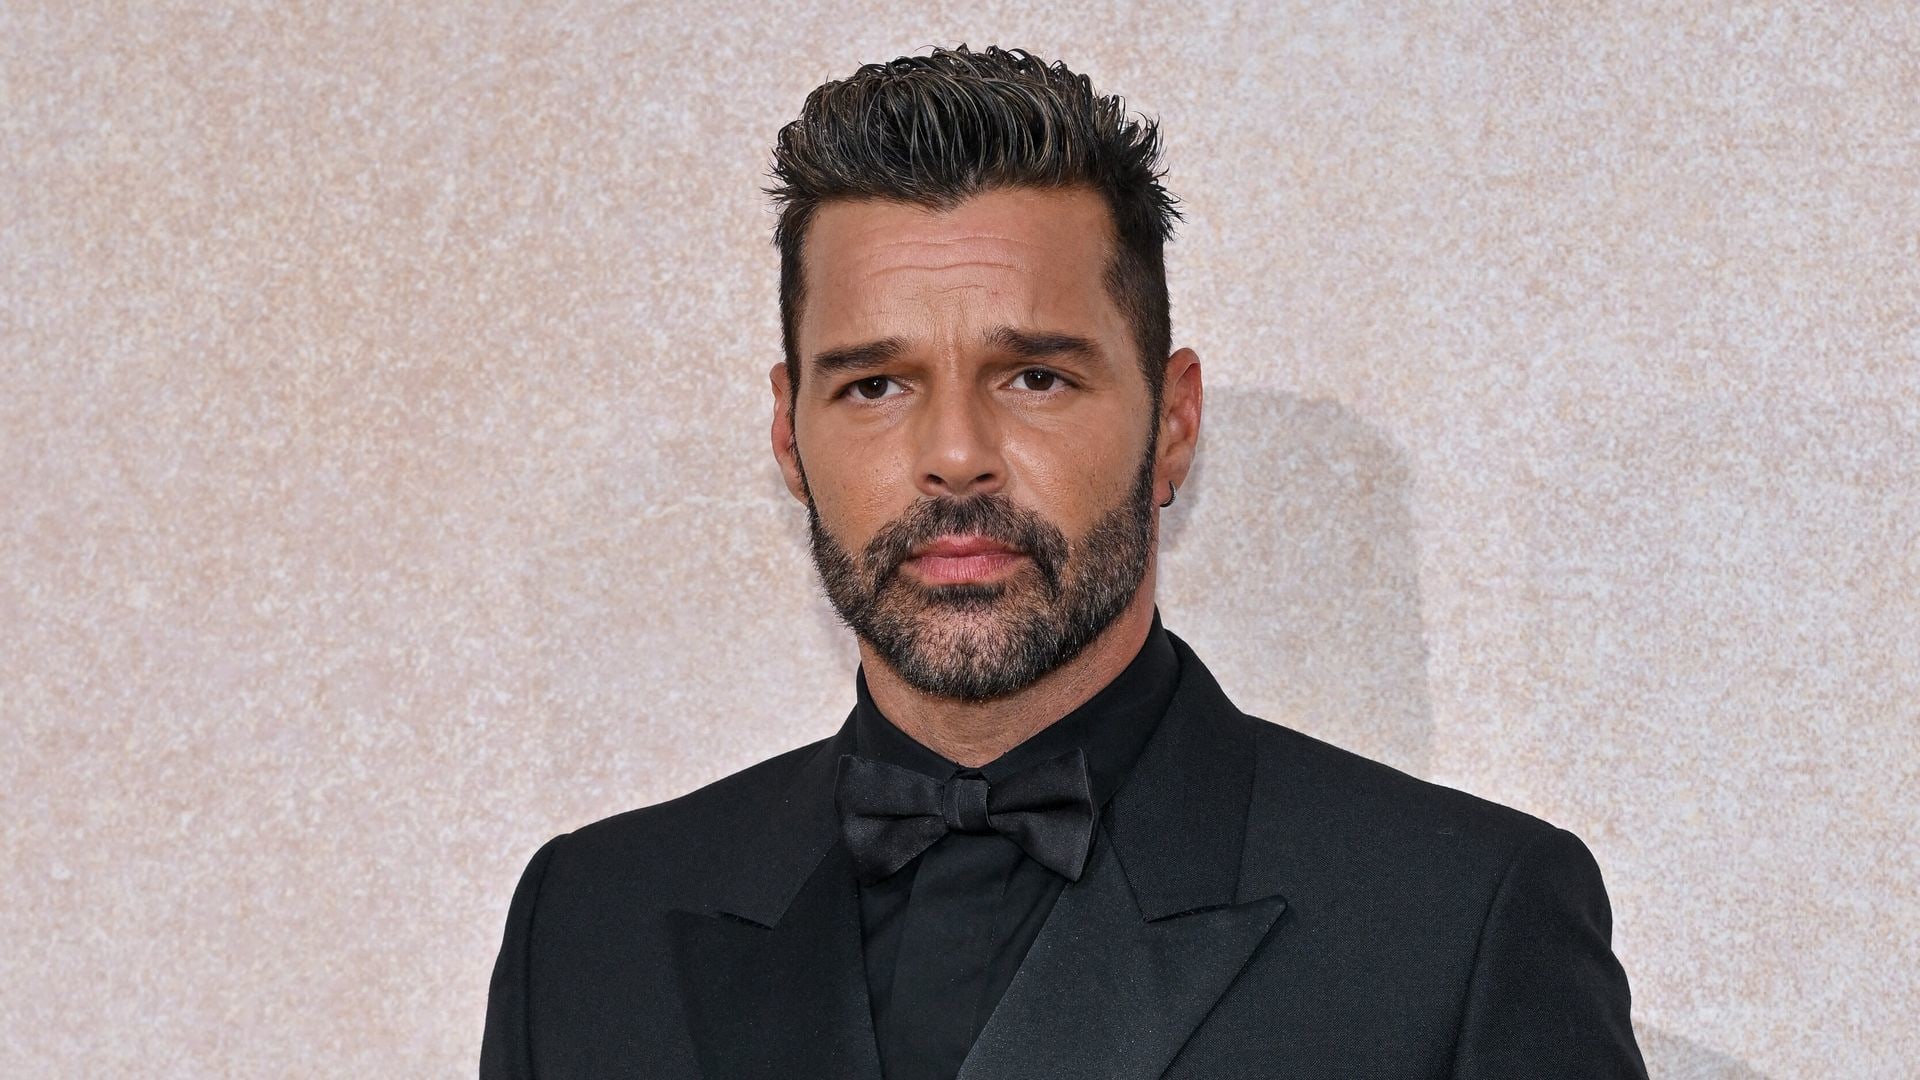 Ricky Martin in black suit